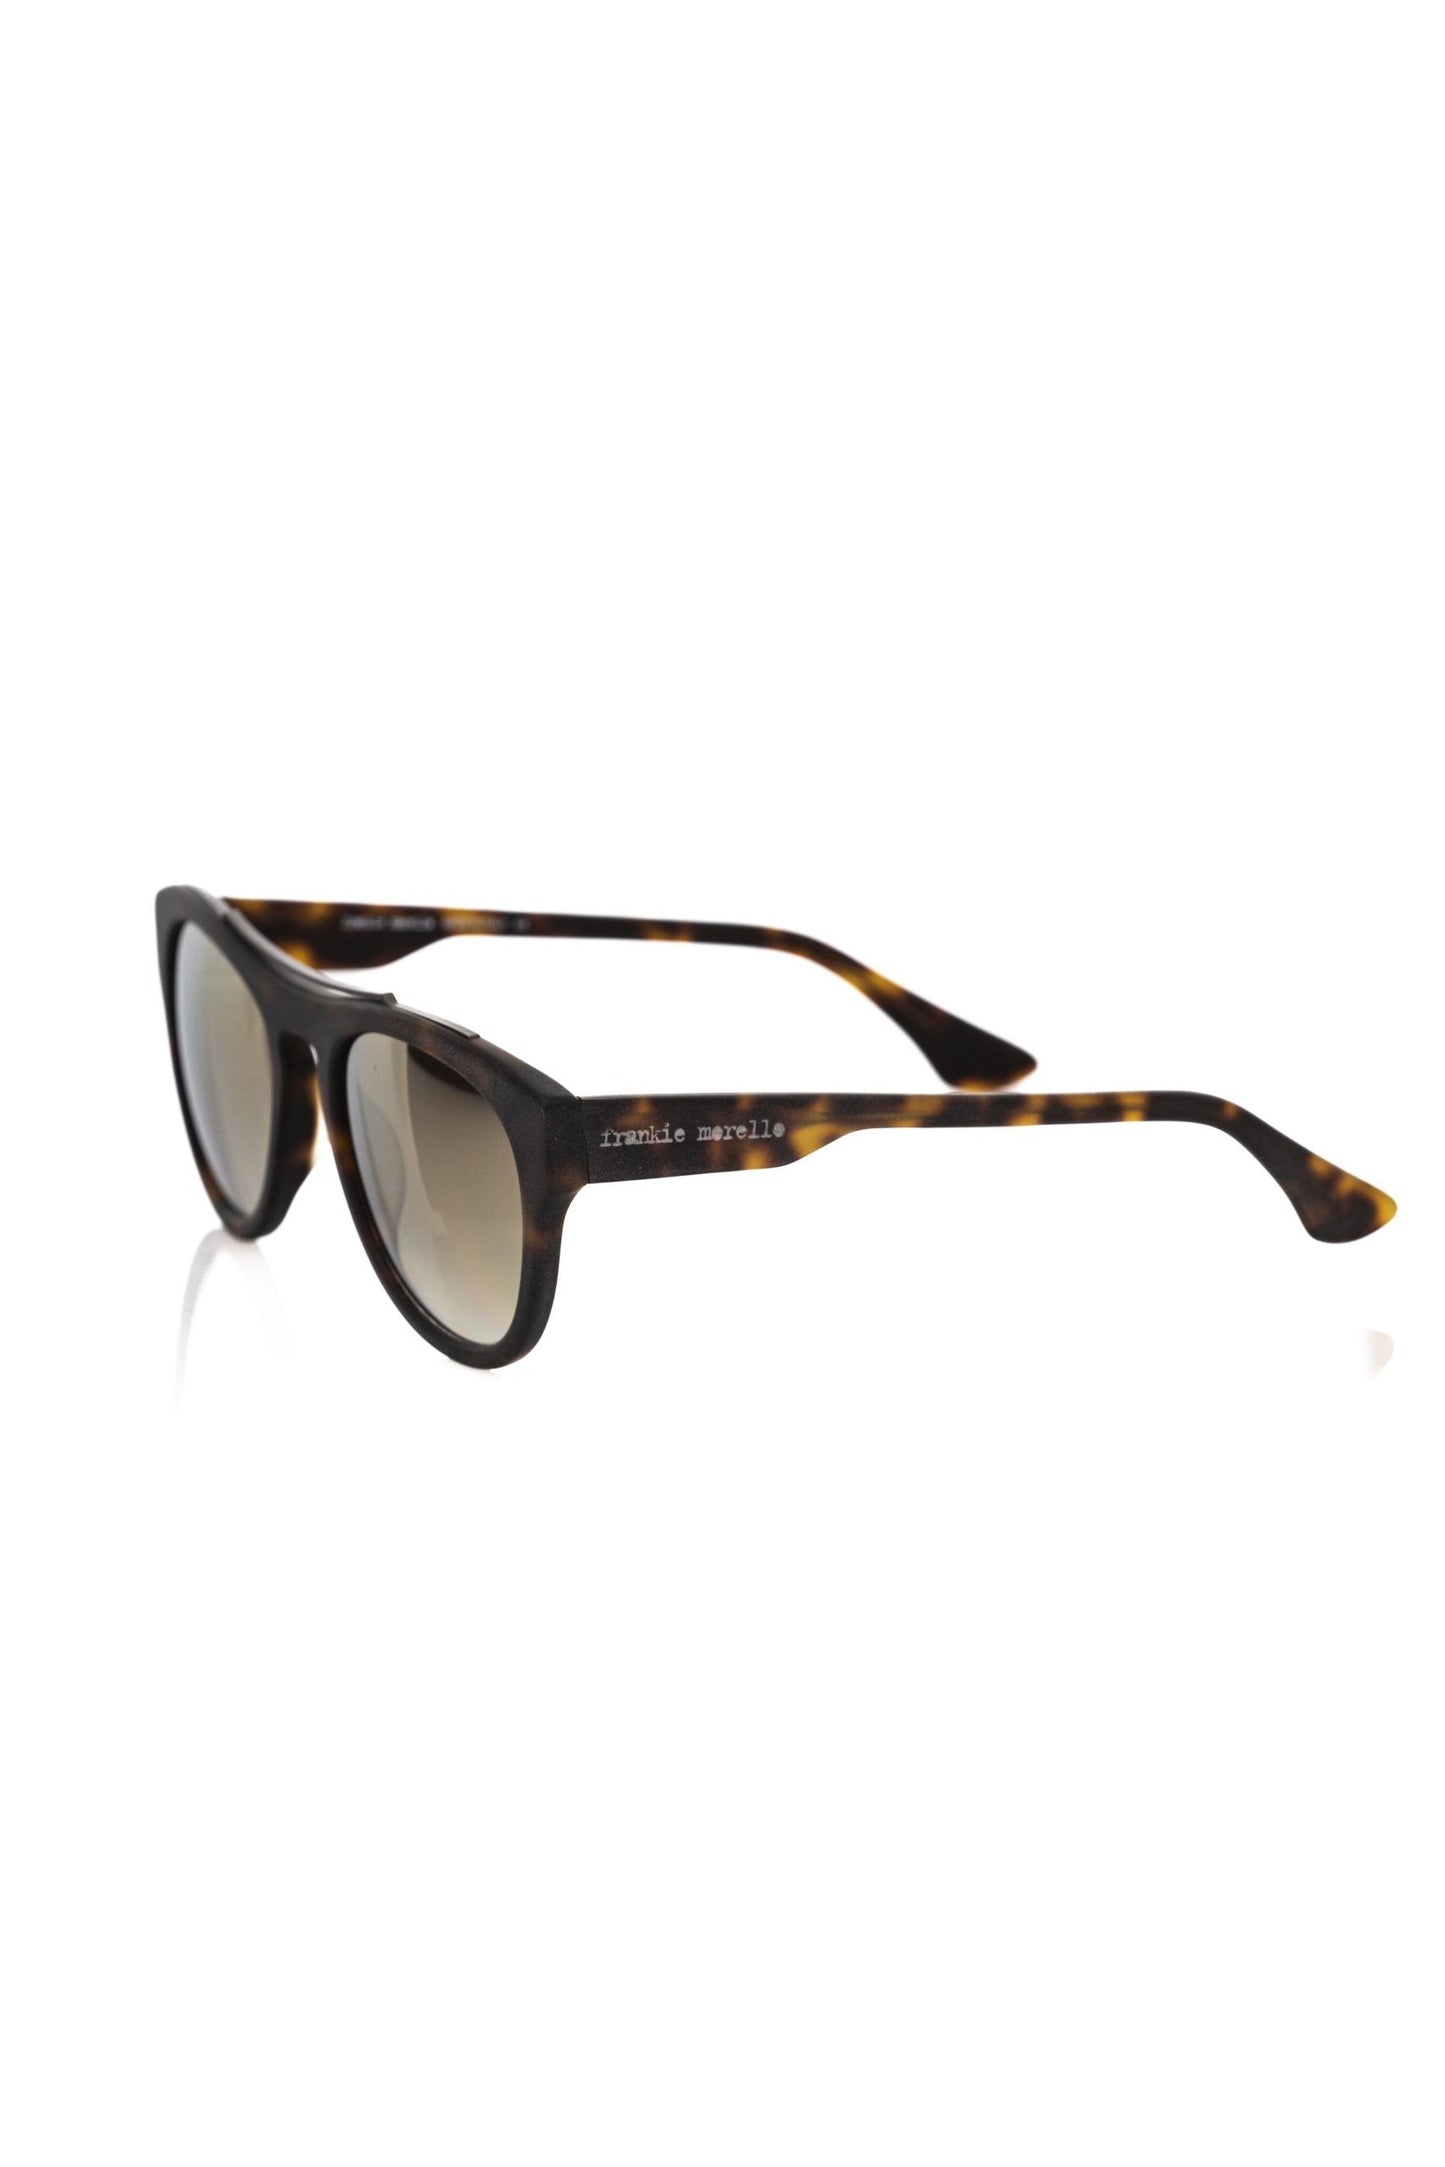 Frankie Morello Havana Charm Wayfarer Sunglasses